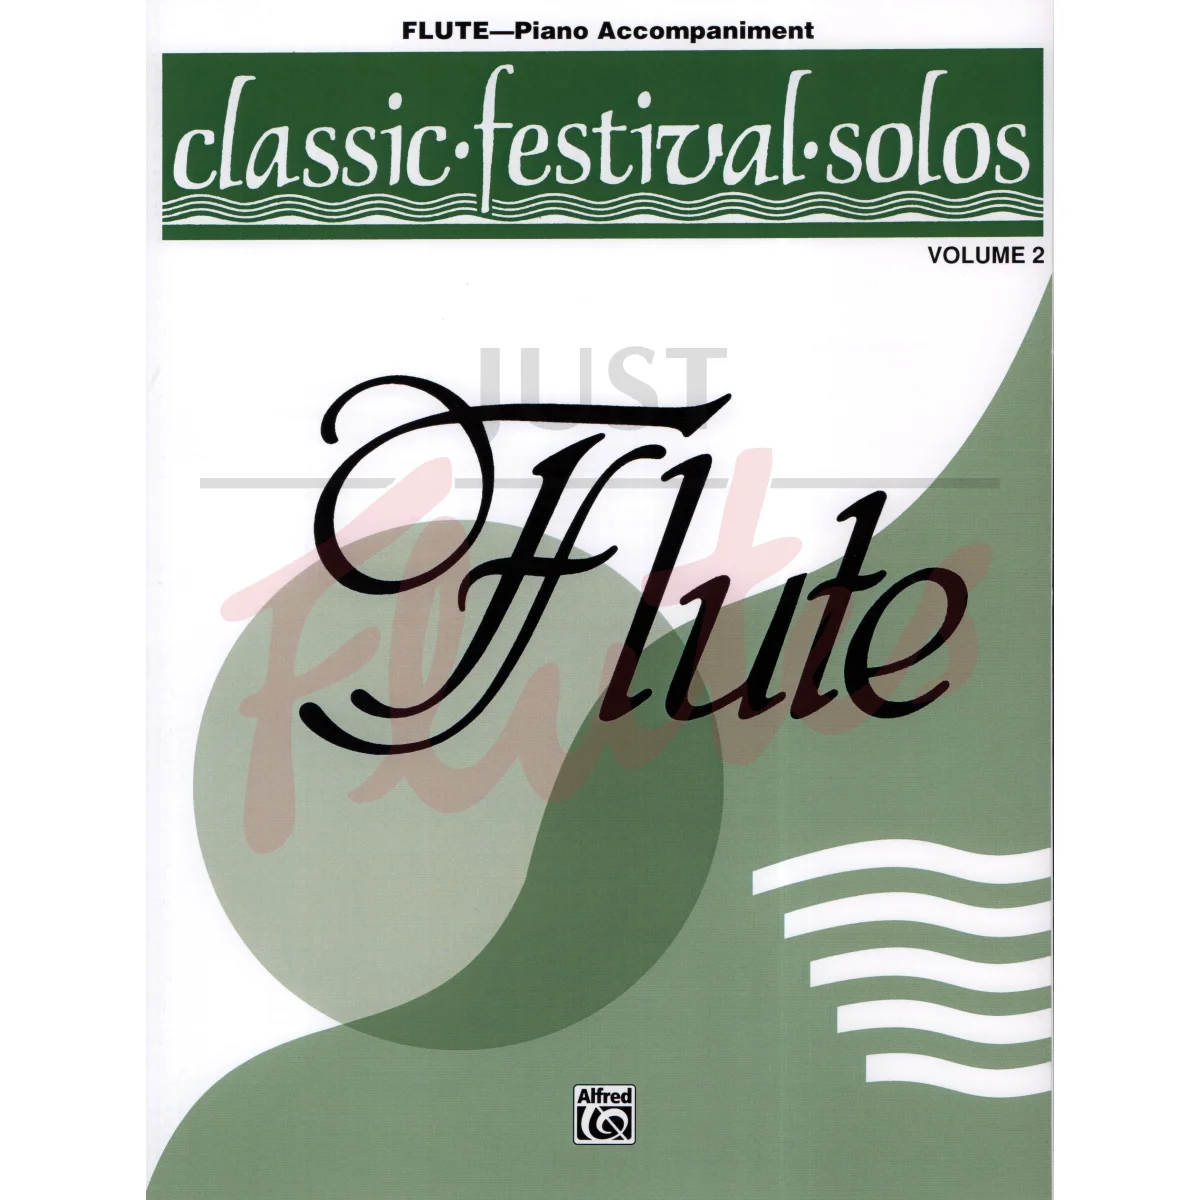 Classic Festival Solos for Flute, Volume 2 - Piano Accompaniment Part